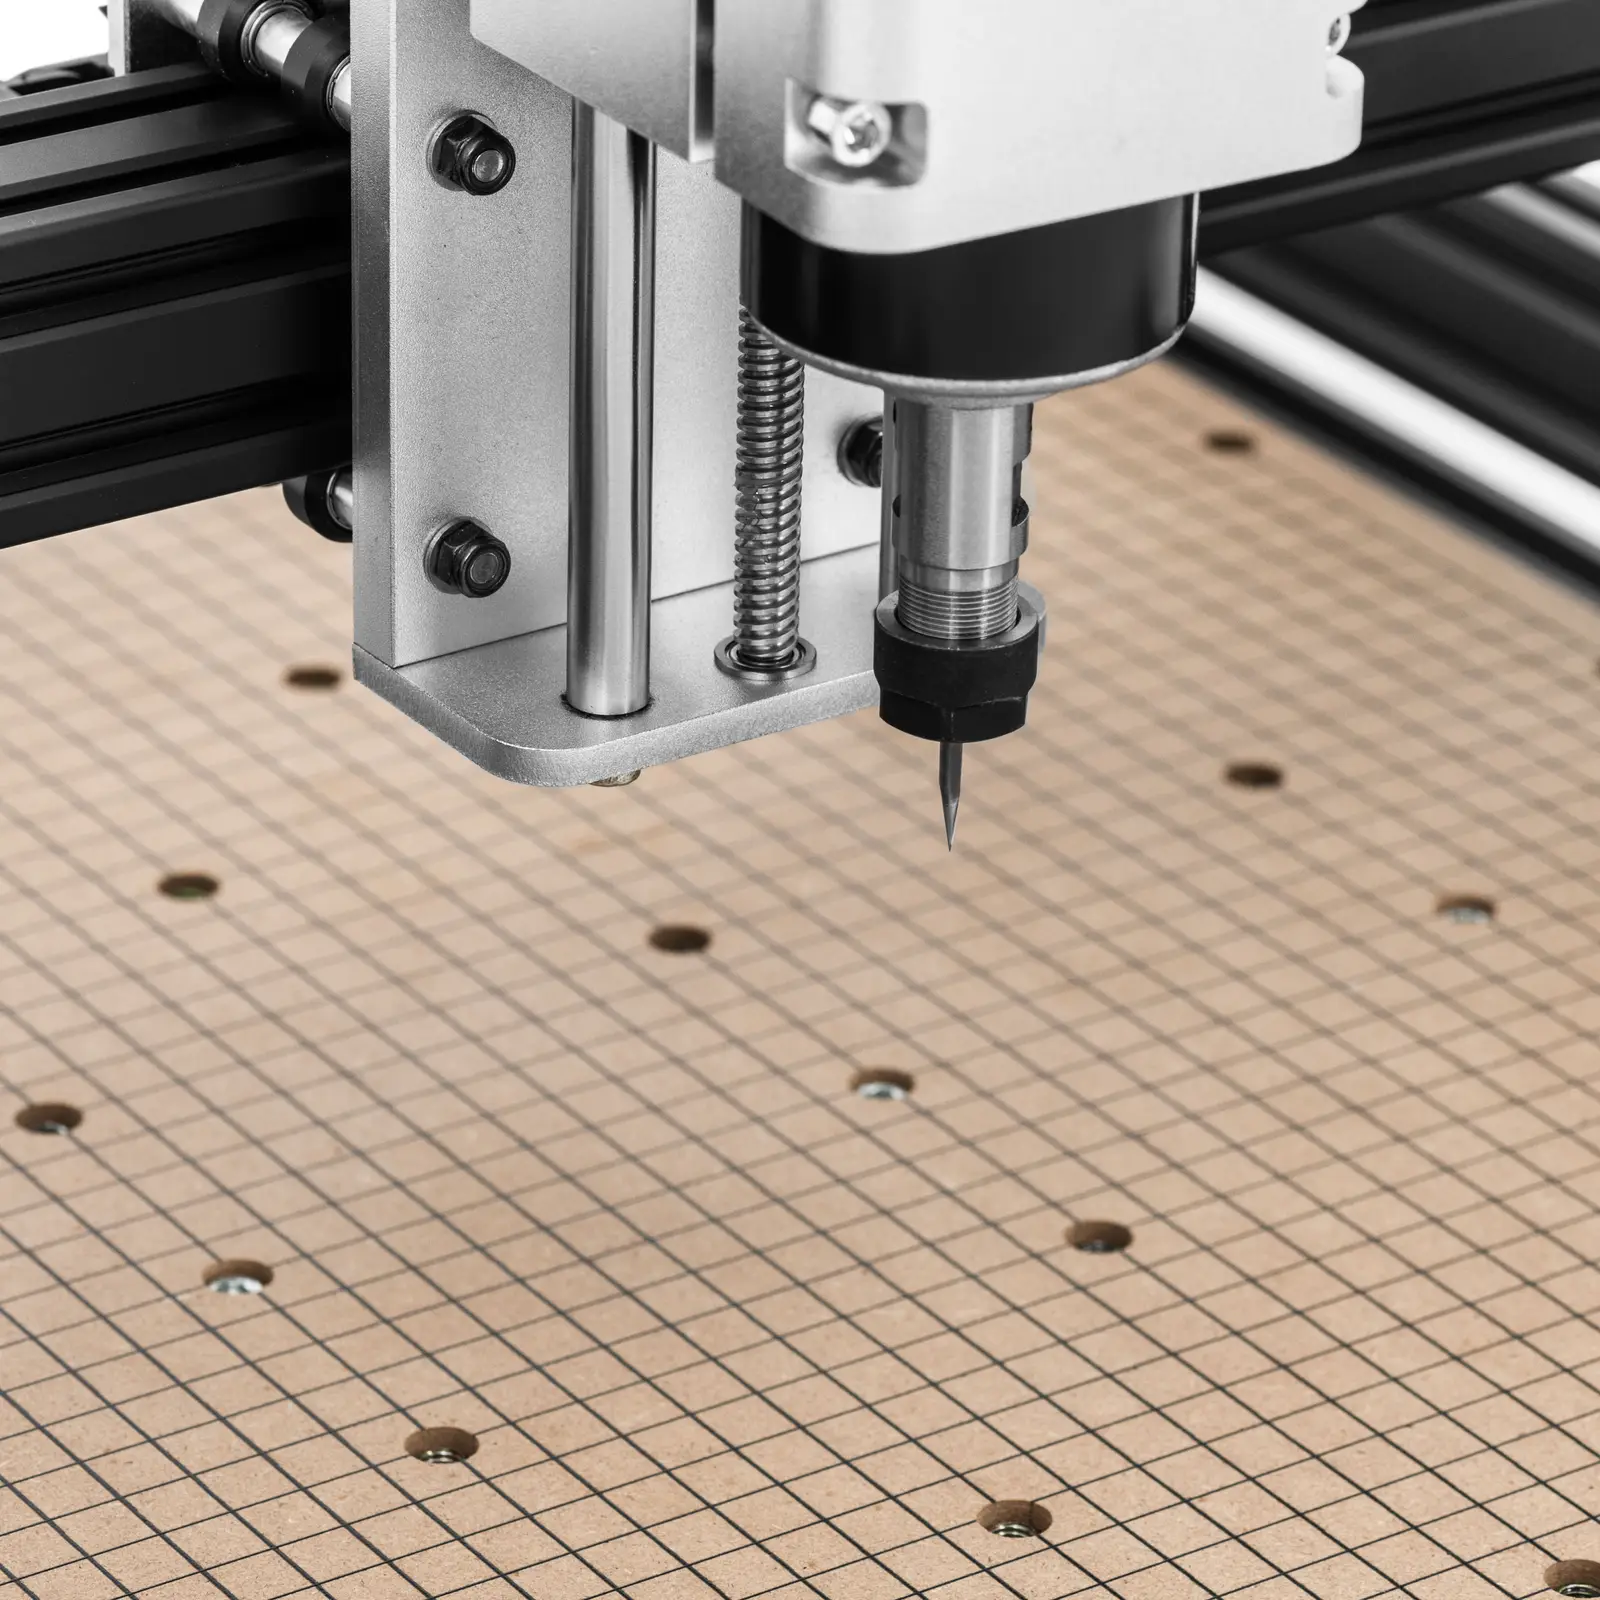 CNC milling machine - 500 W - 43 x 39 cm